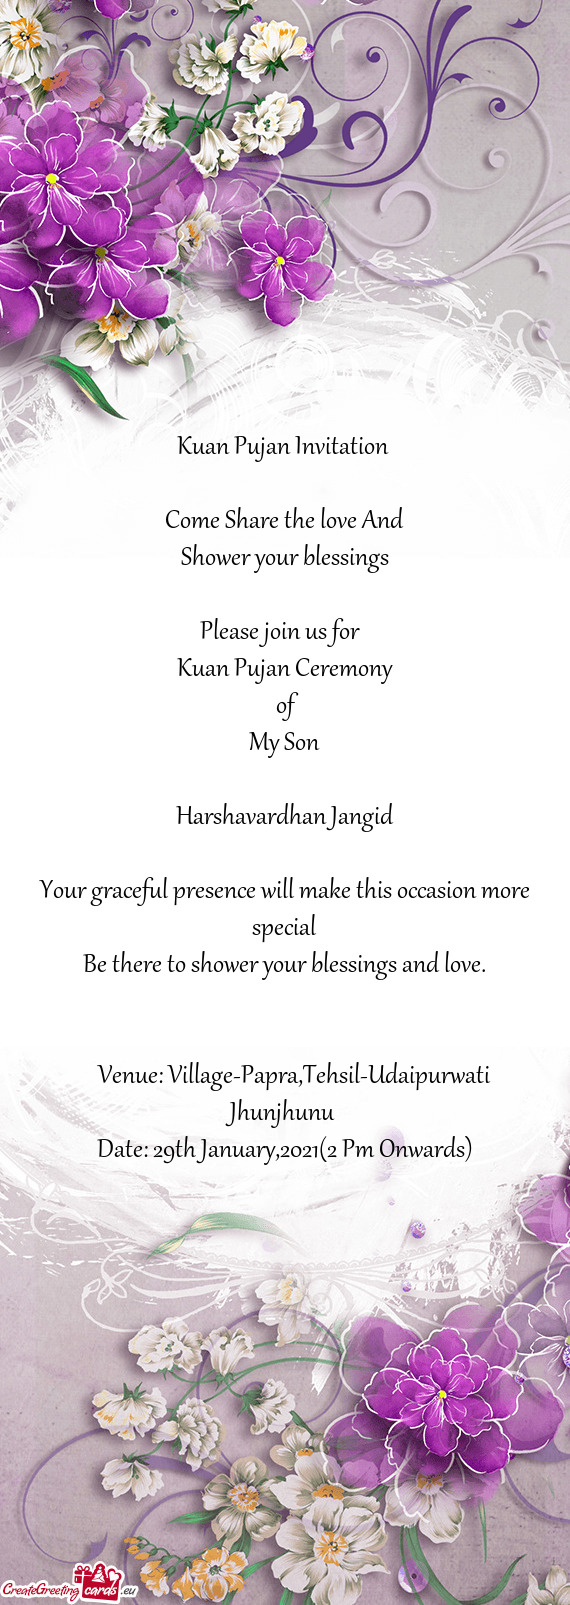 Venue: Village-Papra,Tehsil-Udaipurwati